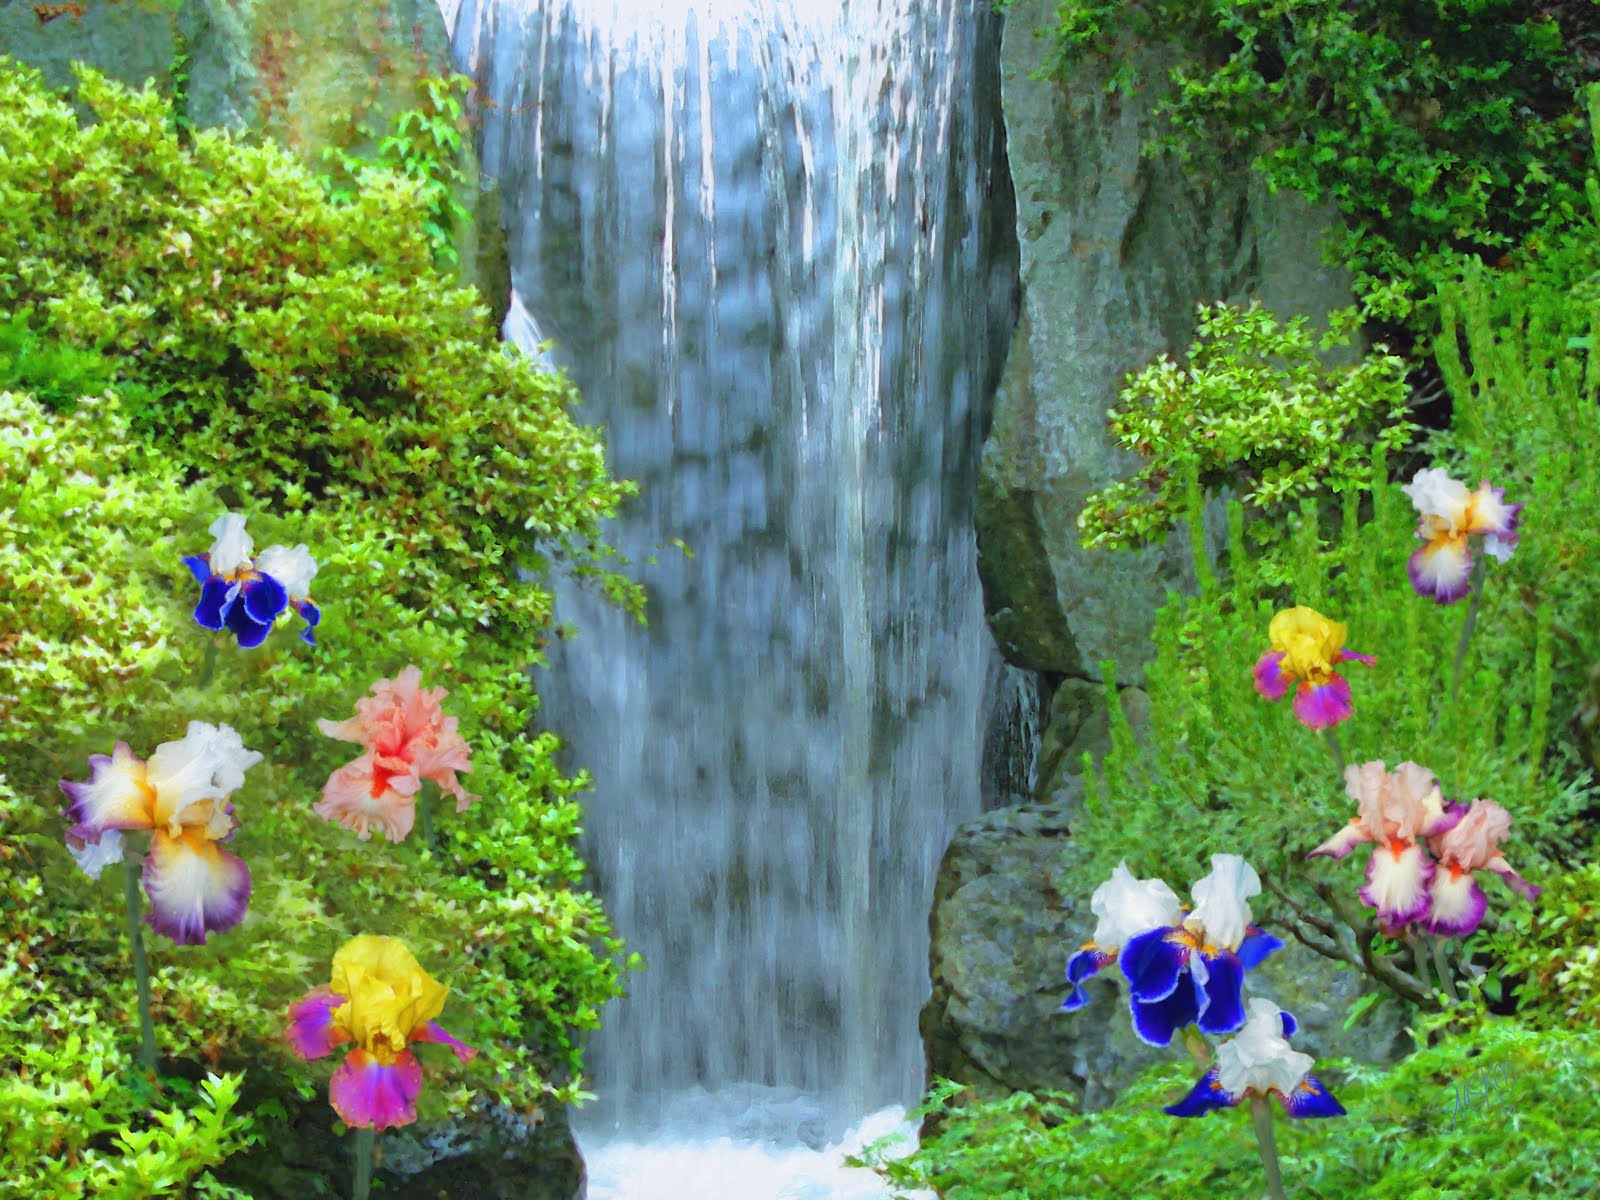 Iris Flower Beside The Waterfall Wallpaper Me